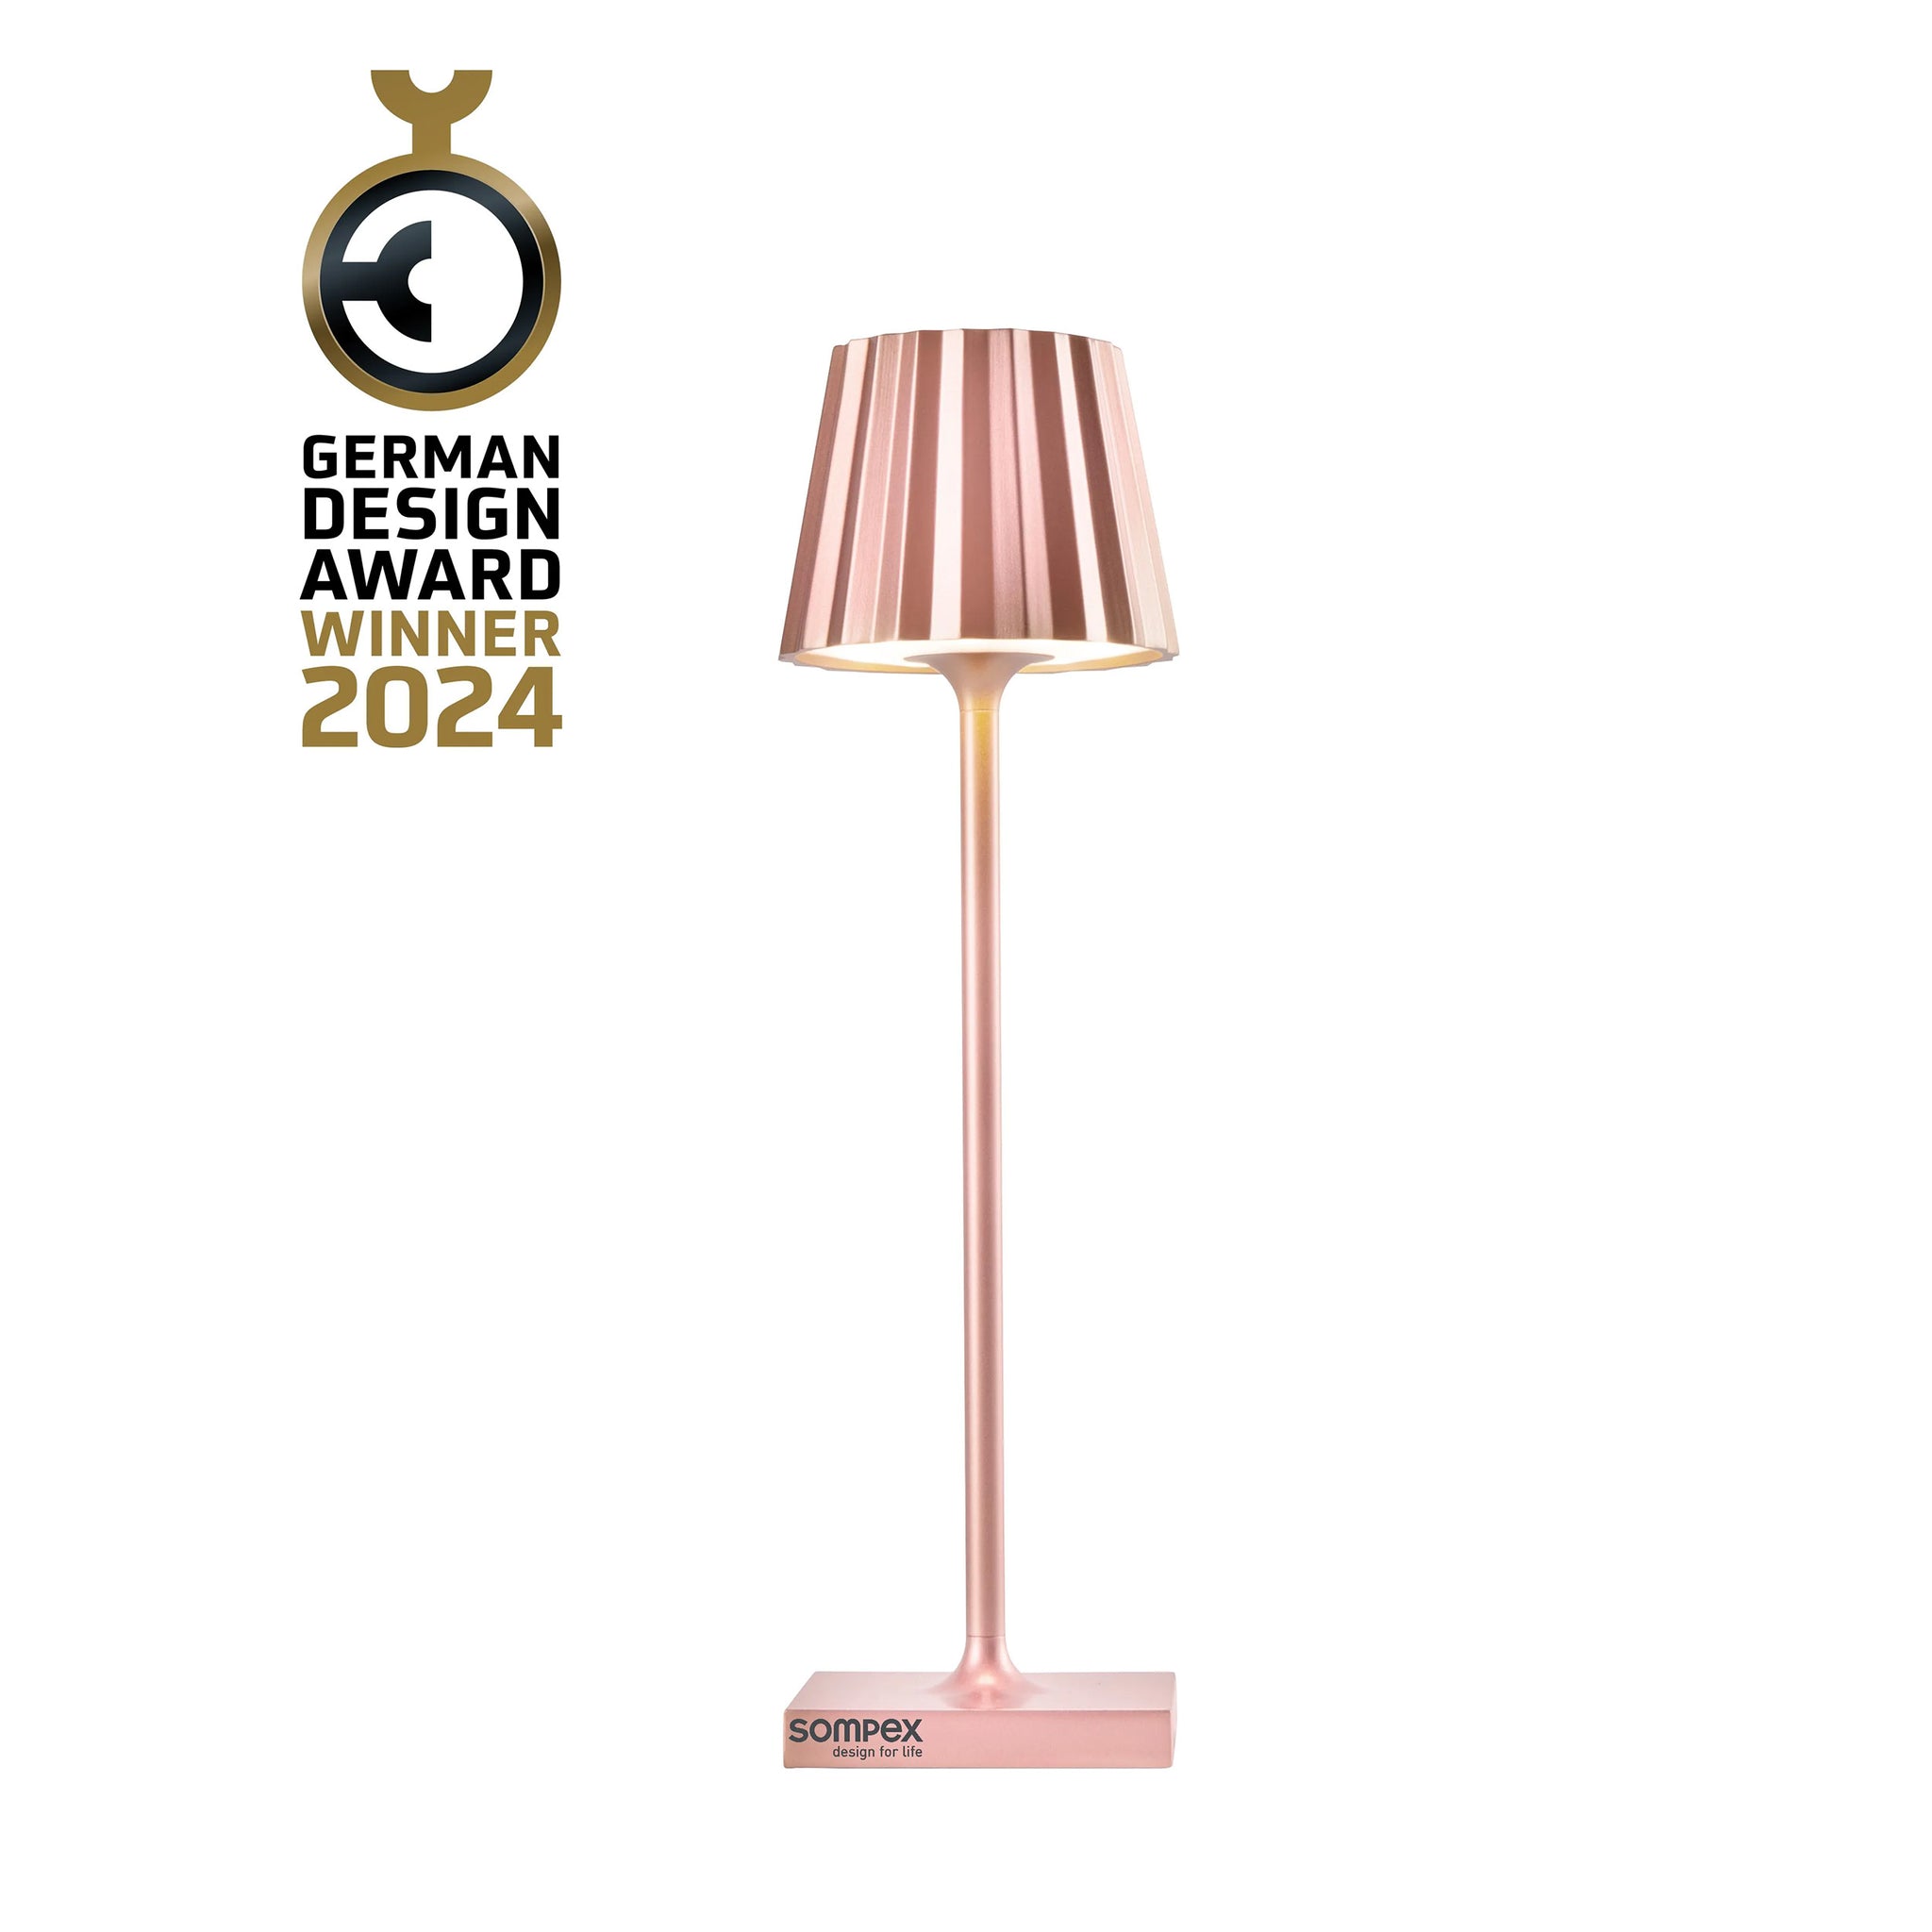 Sompex Troll Nano Roségoud│Oplaadbare Tafellamp│Buitenverlichting│art. 78589│met logo German Design Award Winner 2024